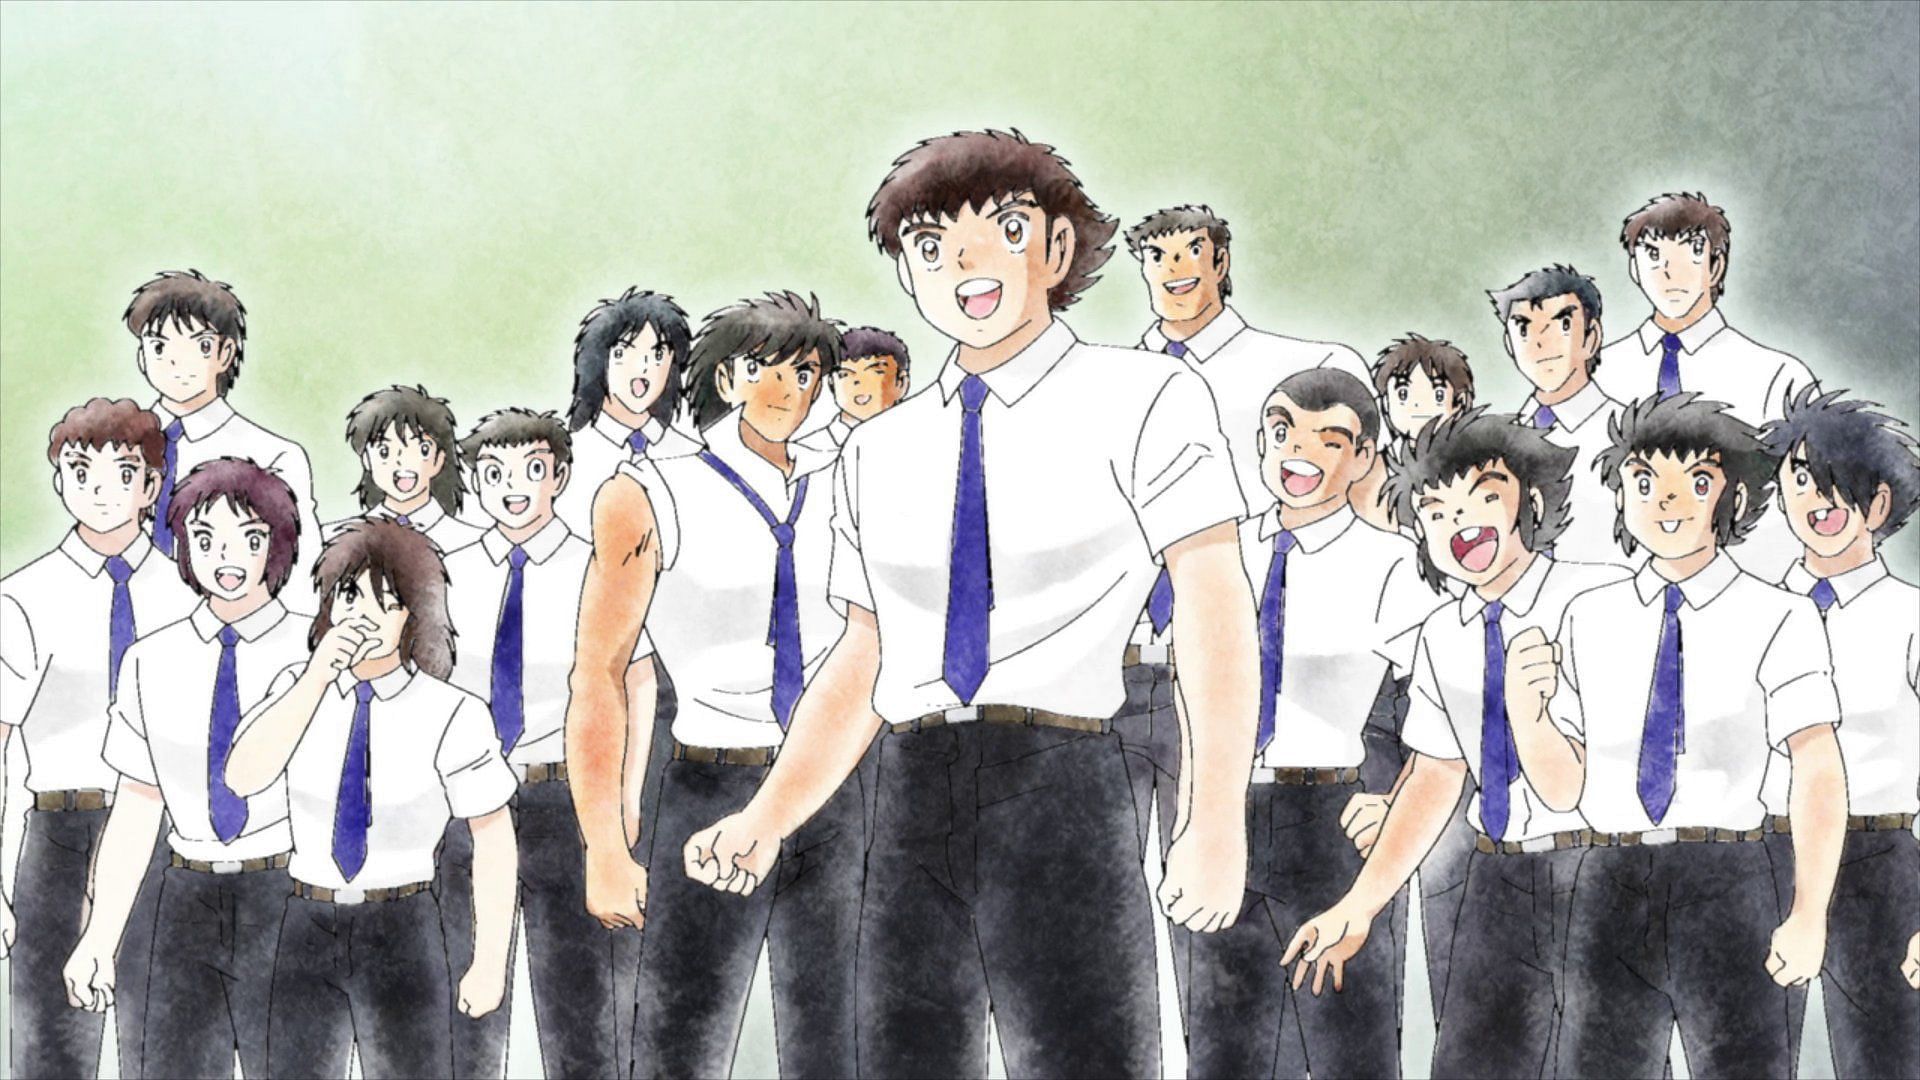 The Japan national youth team (Image via Studio Kai).